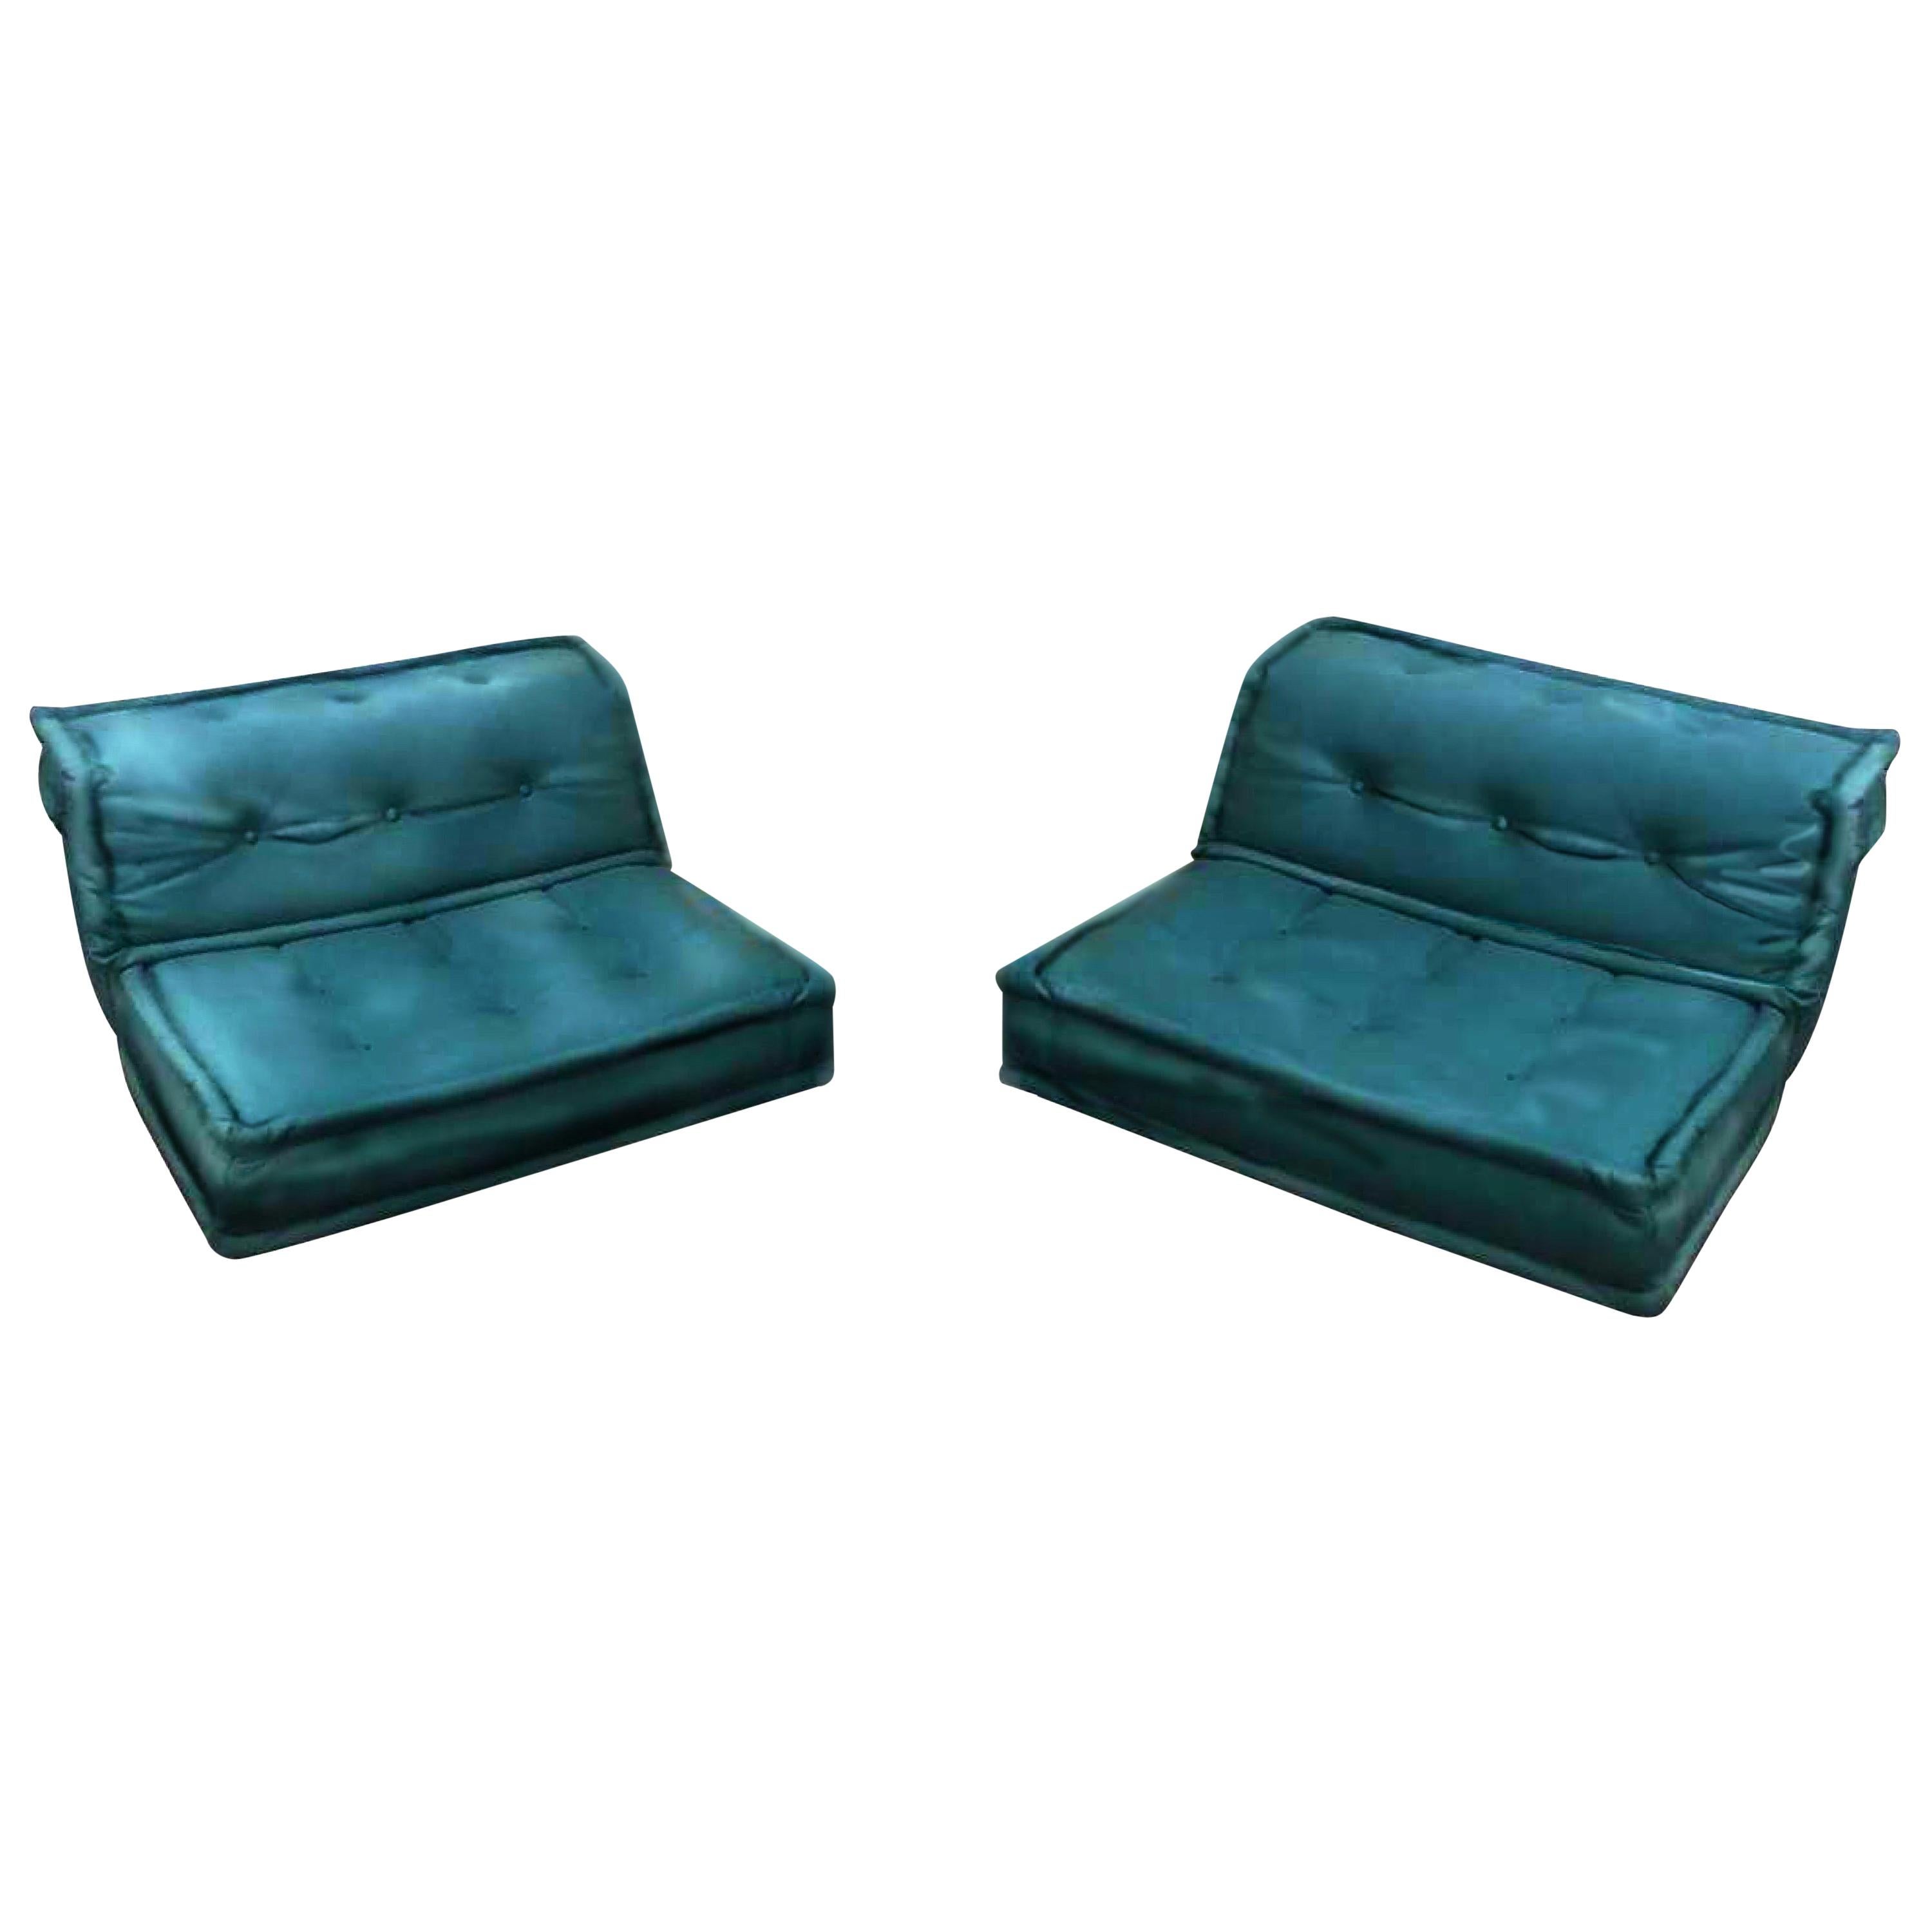 Le Mah Jong Modular Lounge Chair Roche Bobois Custom Jean Paul Gaultier Leather